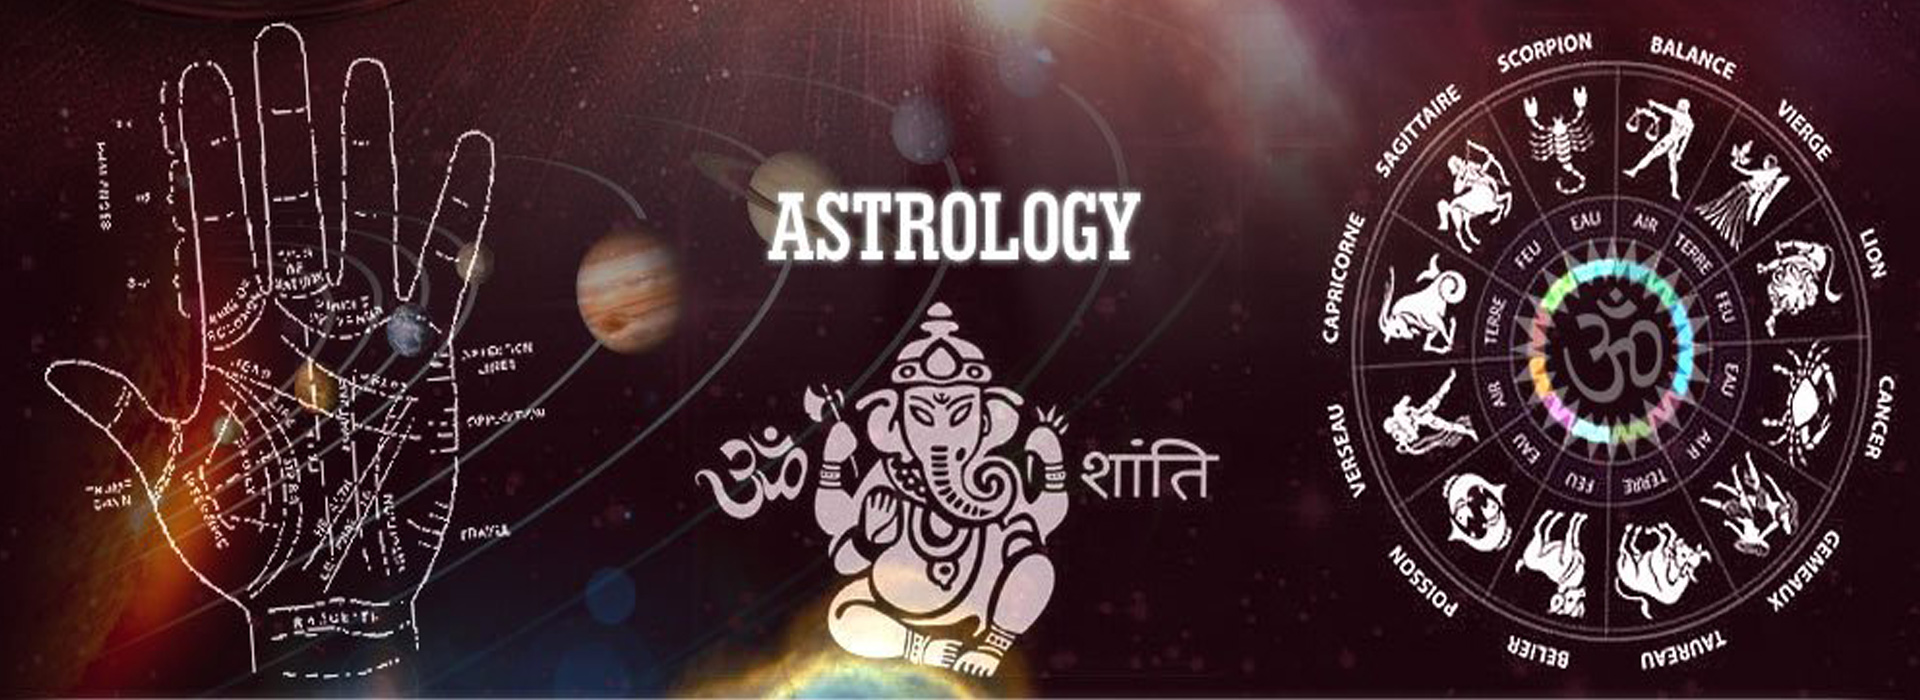 Yoga Sri Jothida Nilayam Gems | Astrologer 